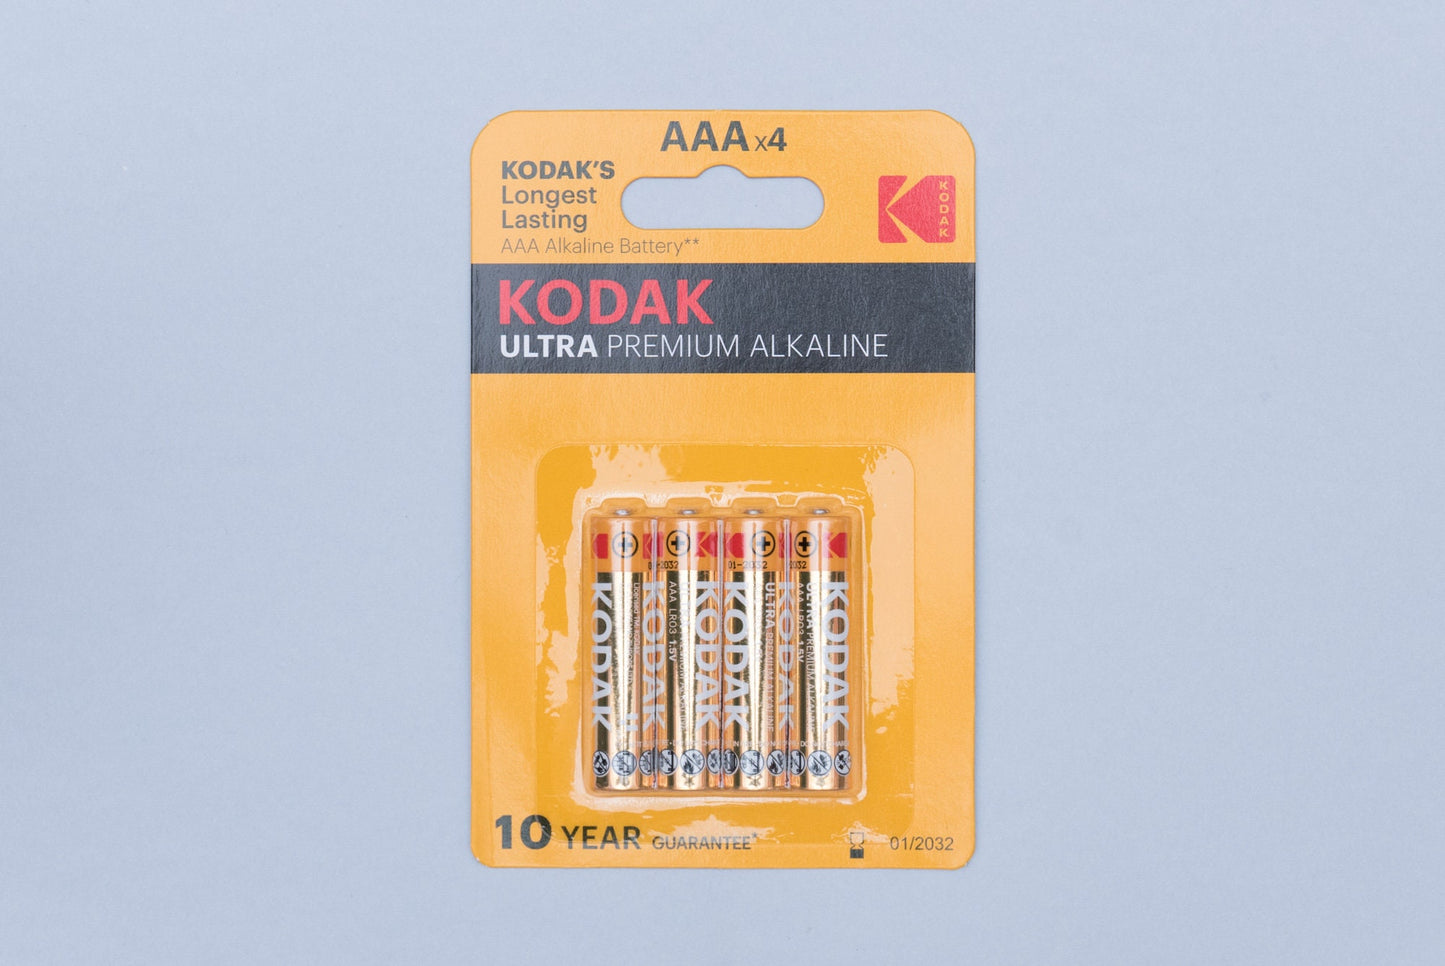 Kodak AAA x4 Battery for Film and Digital Cameras